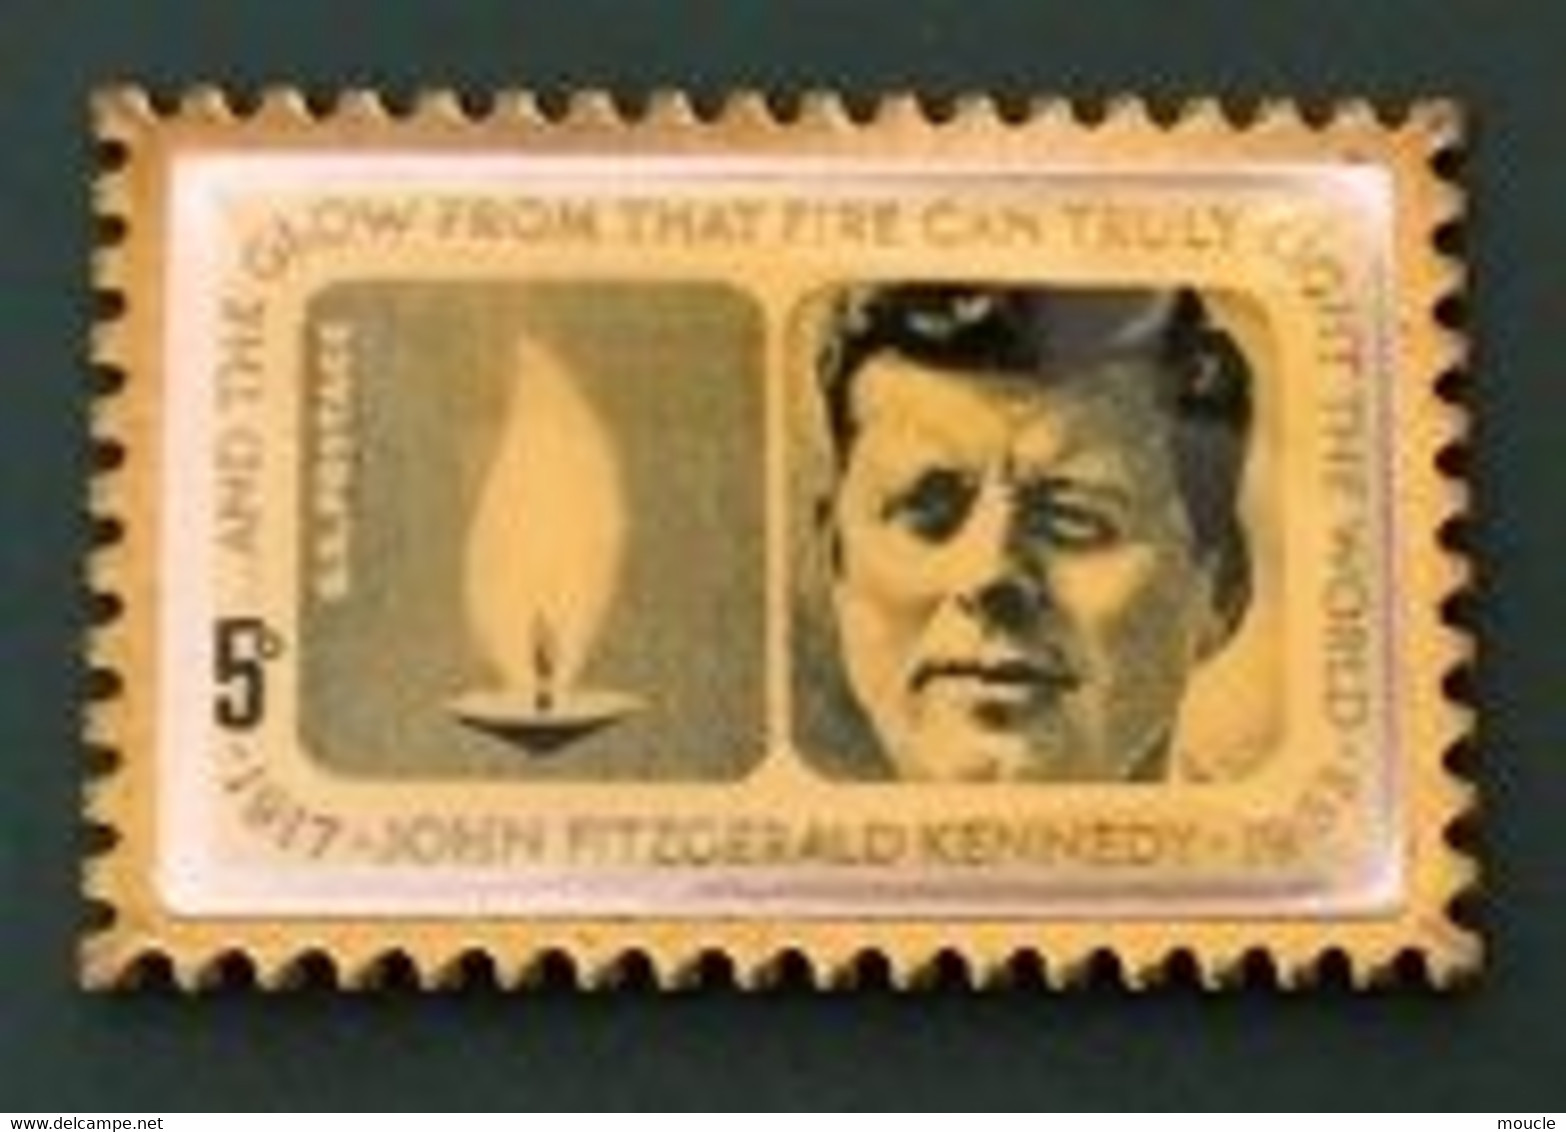 JFK - JOHN FITZGERALD KENNEDY - 1917 / 1963 - USA - 35ème PRESIDENT - TIMBRE - ROCKVILLE MARYLAND - STAMP -     (31) - Personnes Célèbres